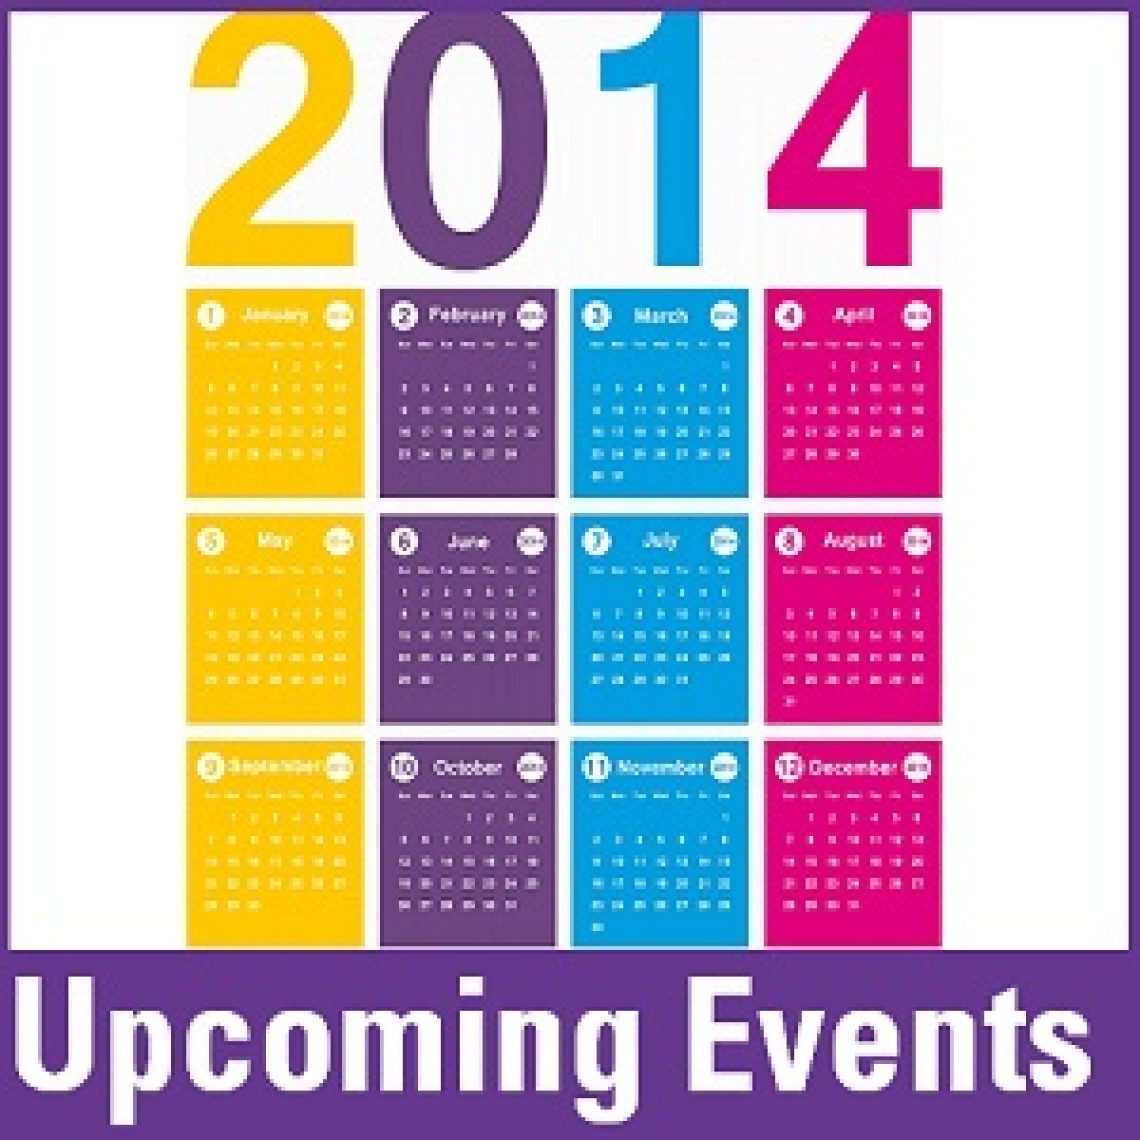 2014_events_calendar46961